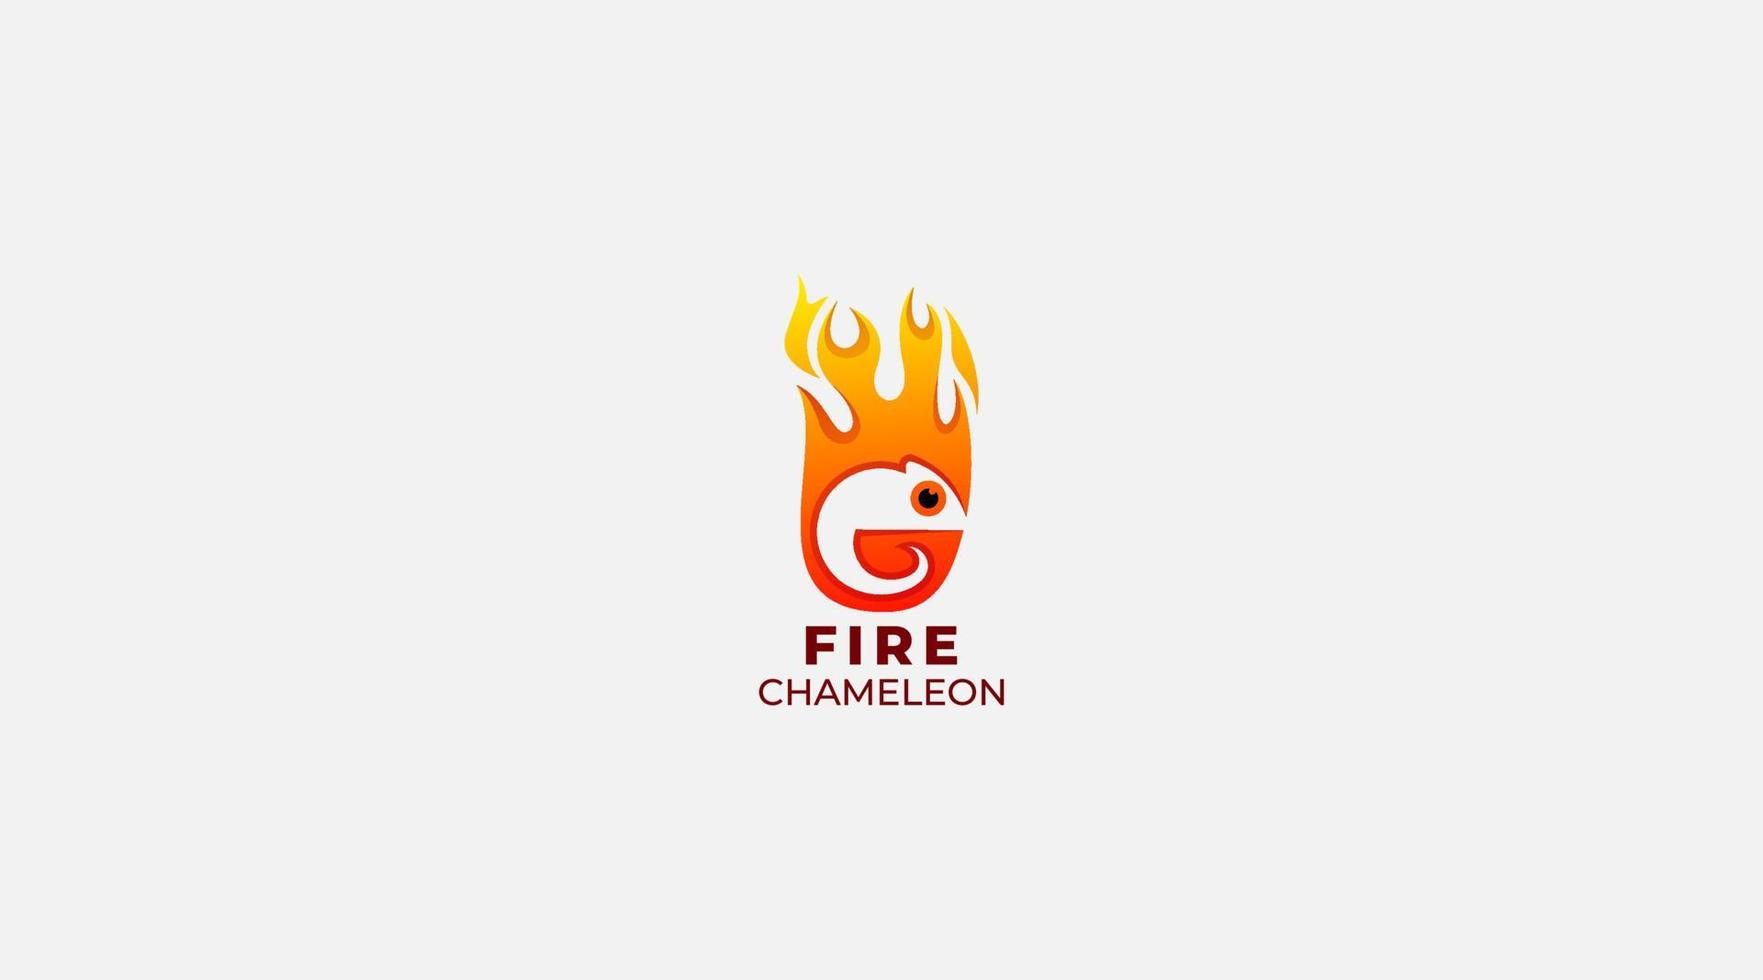 Fire chameleon logo design vector template icon